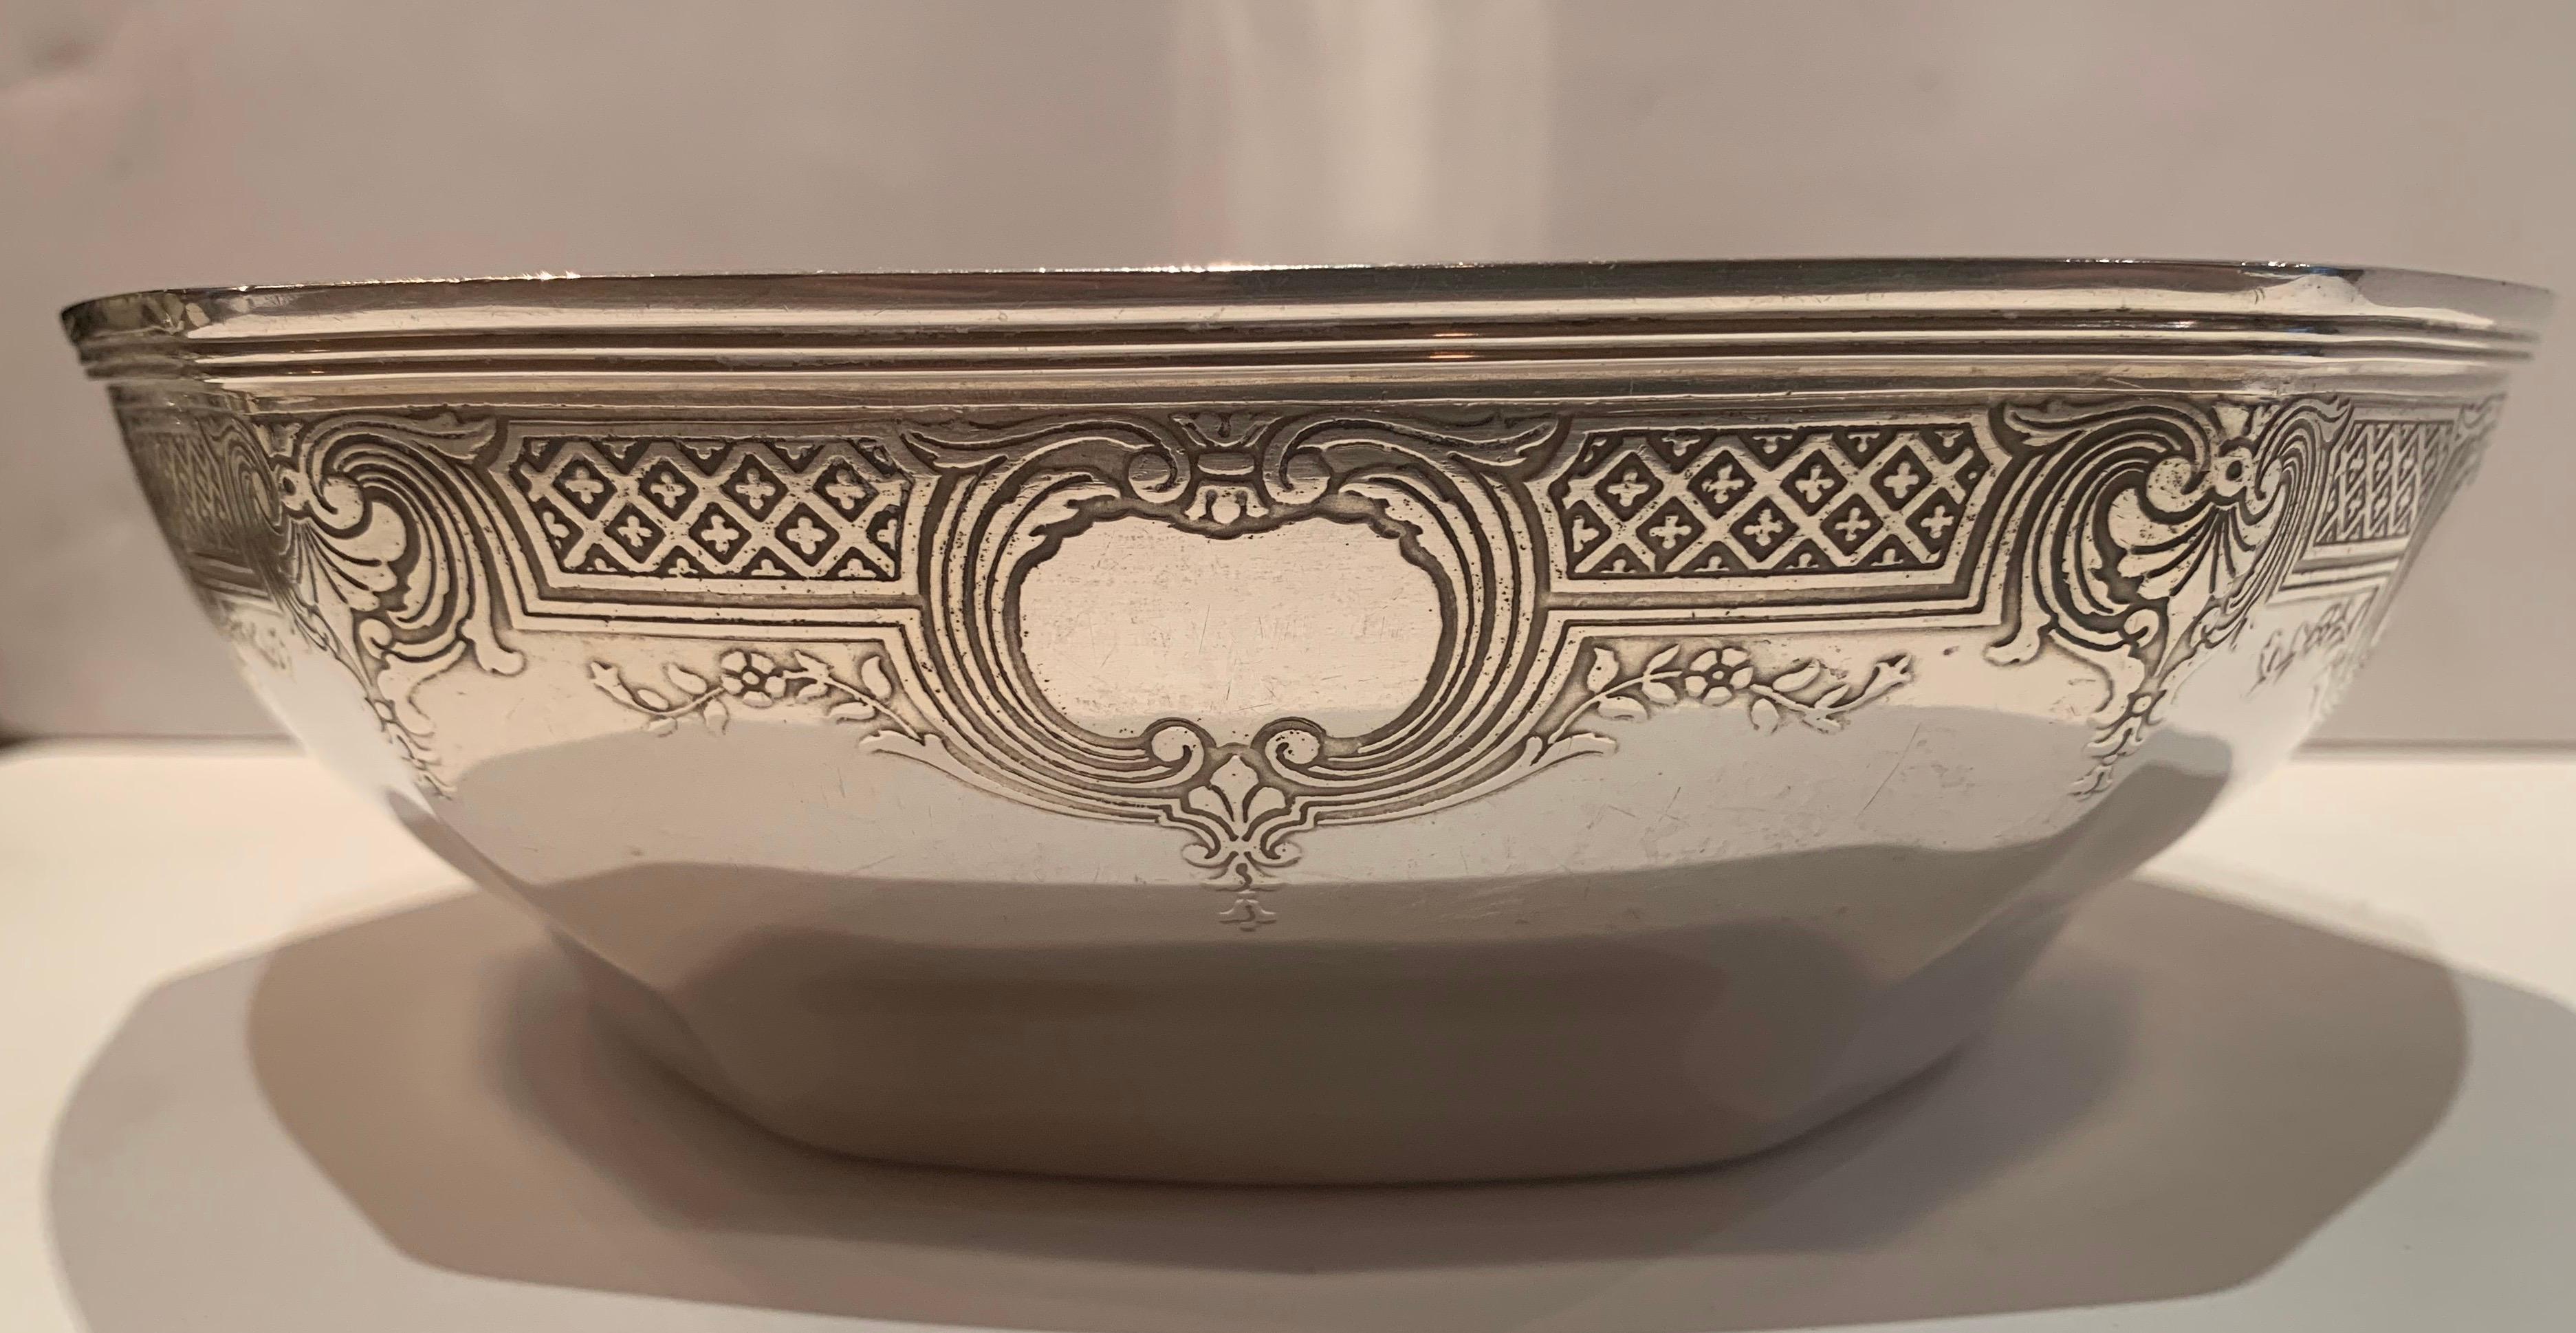 A wonderful Tiffany & Co. Sterling silver octagonal regency centerpiece bowl.